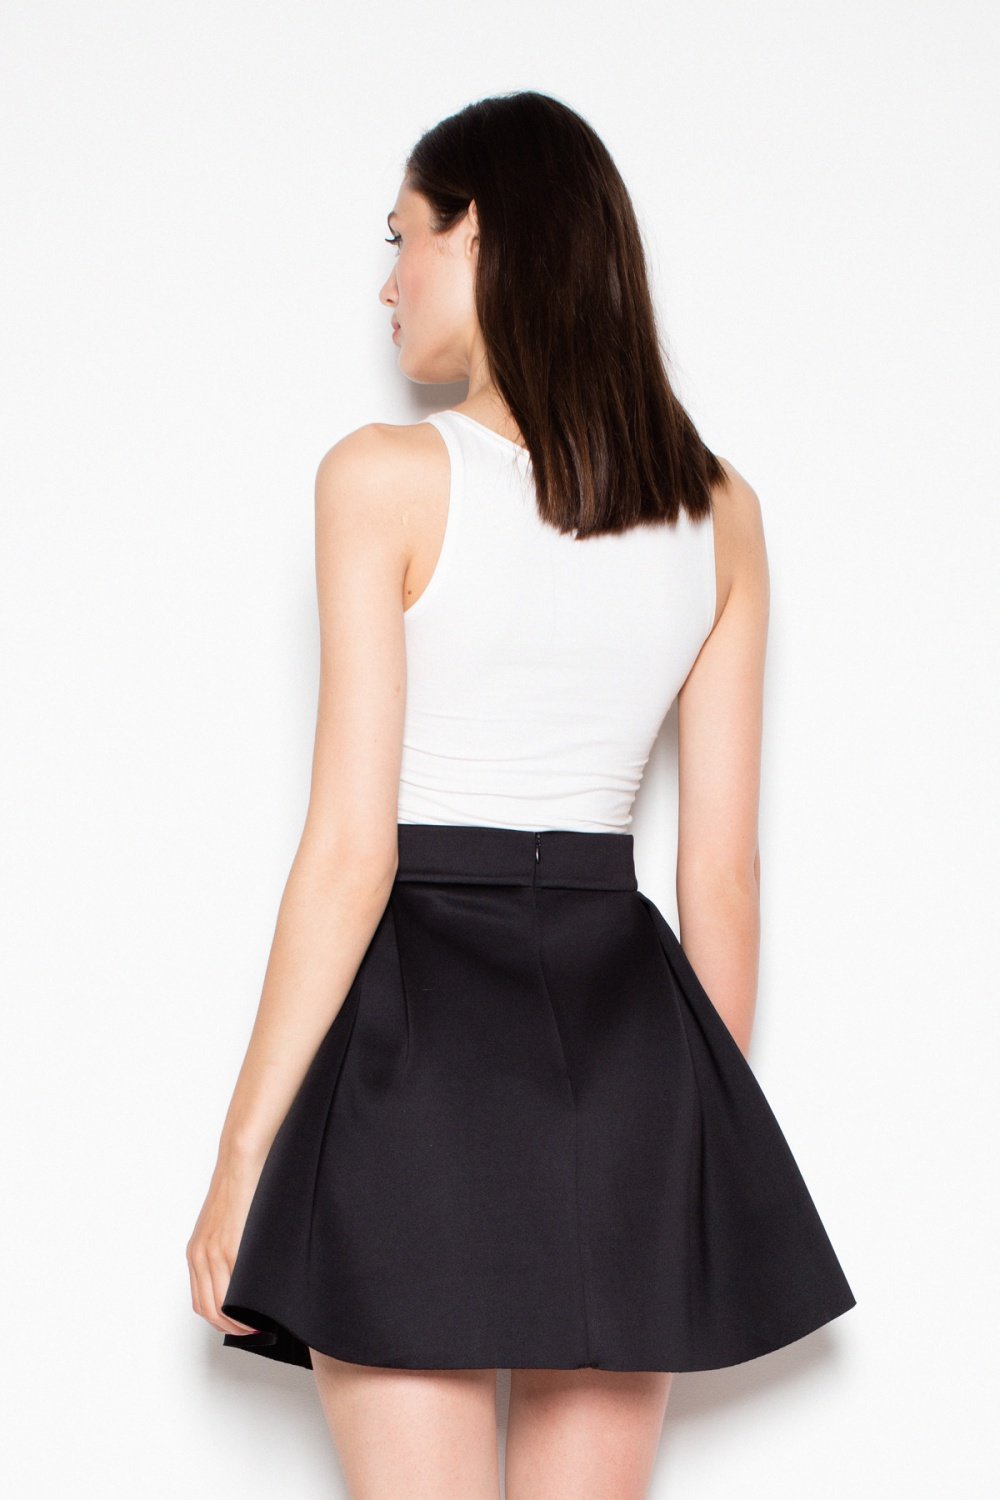 Skirt model 77374 Venaton Posh Styles Apparel